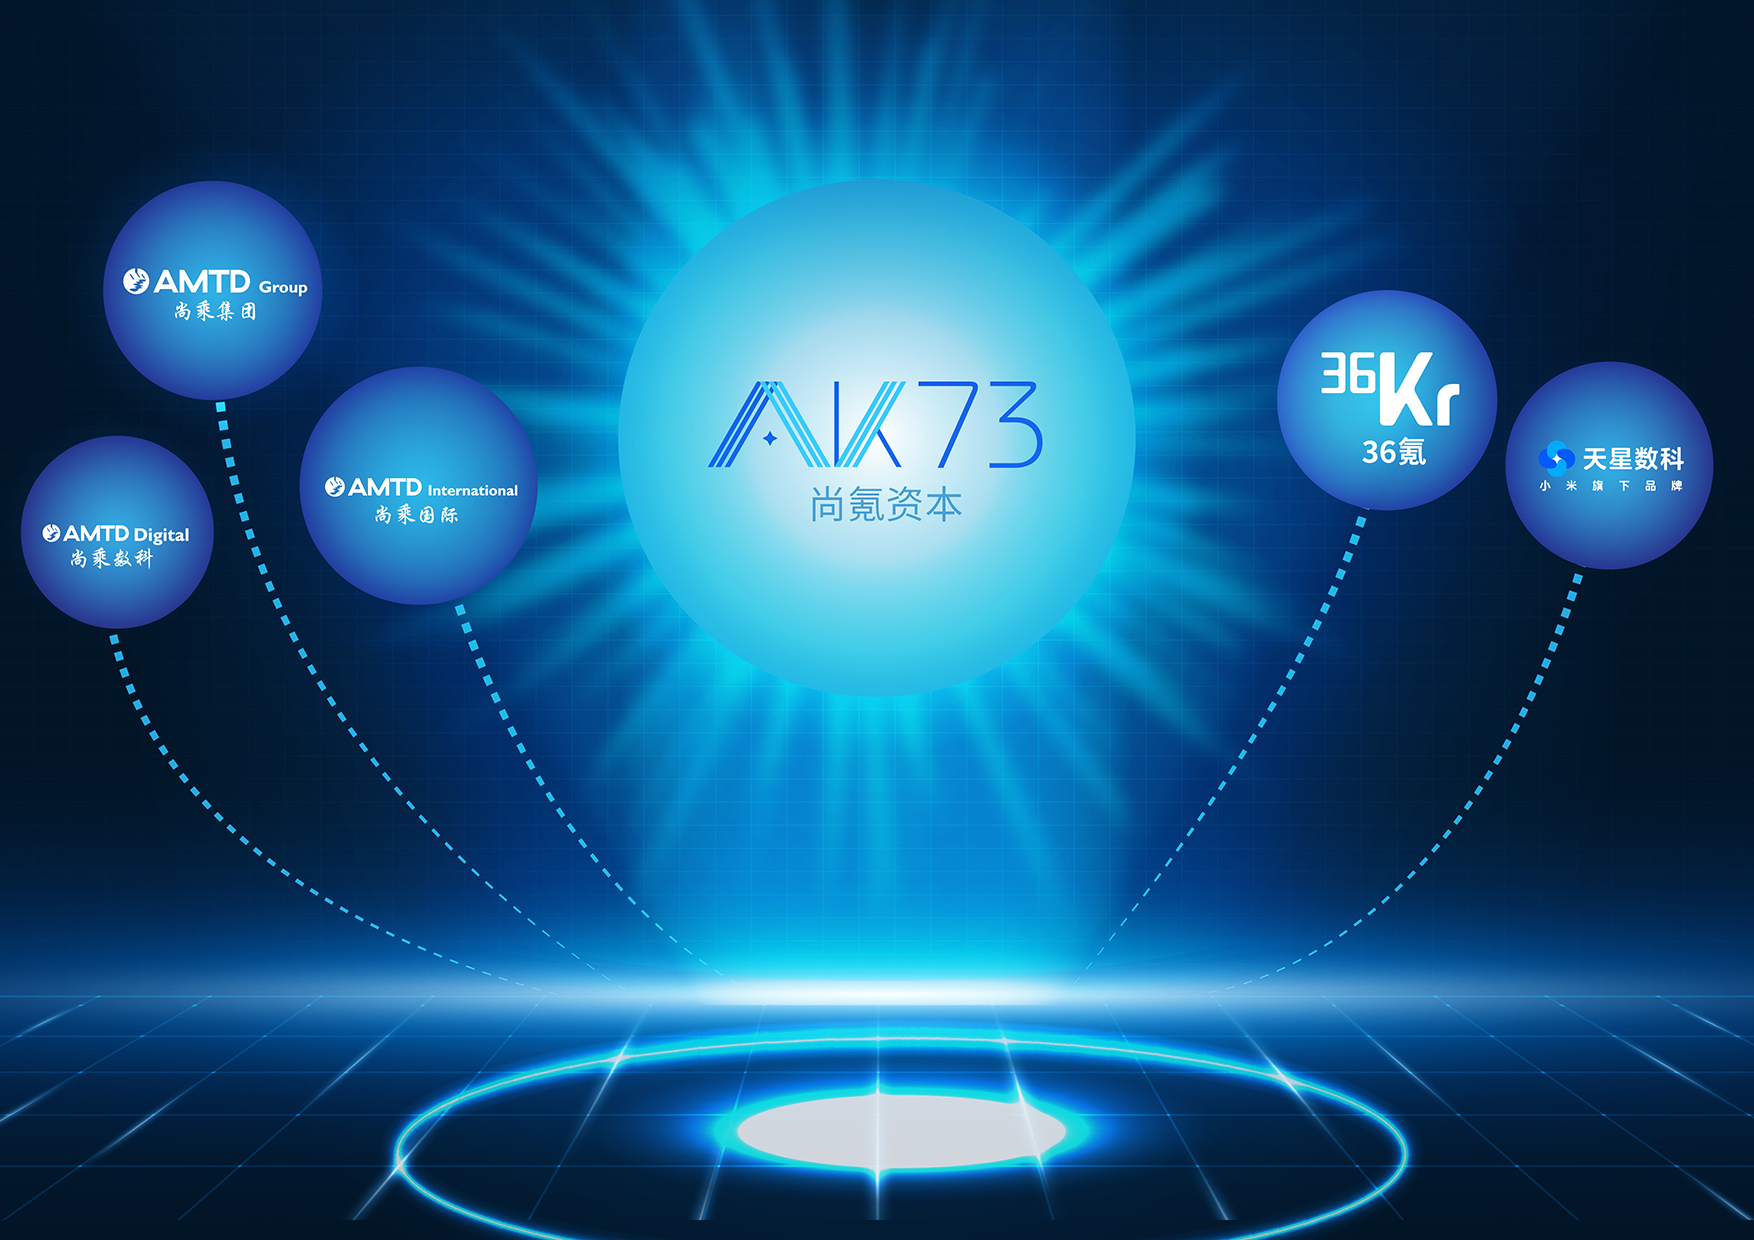 AMTD News | AMTD Partnered with 36Kr & Xiaomi to Announce a JV: AK73 Capital